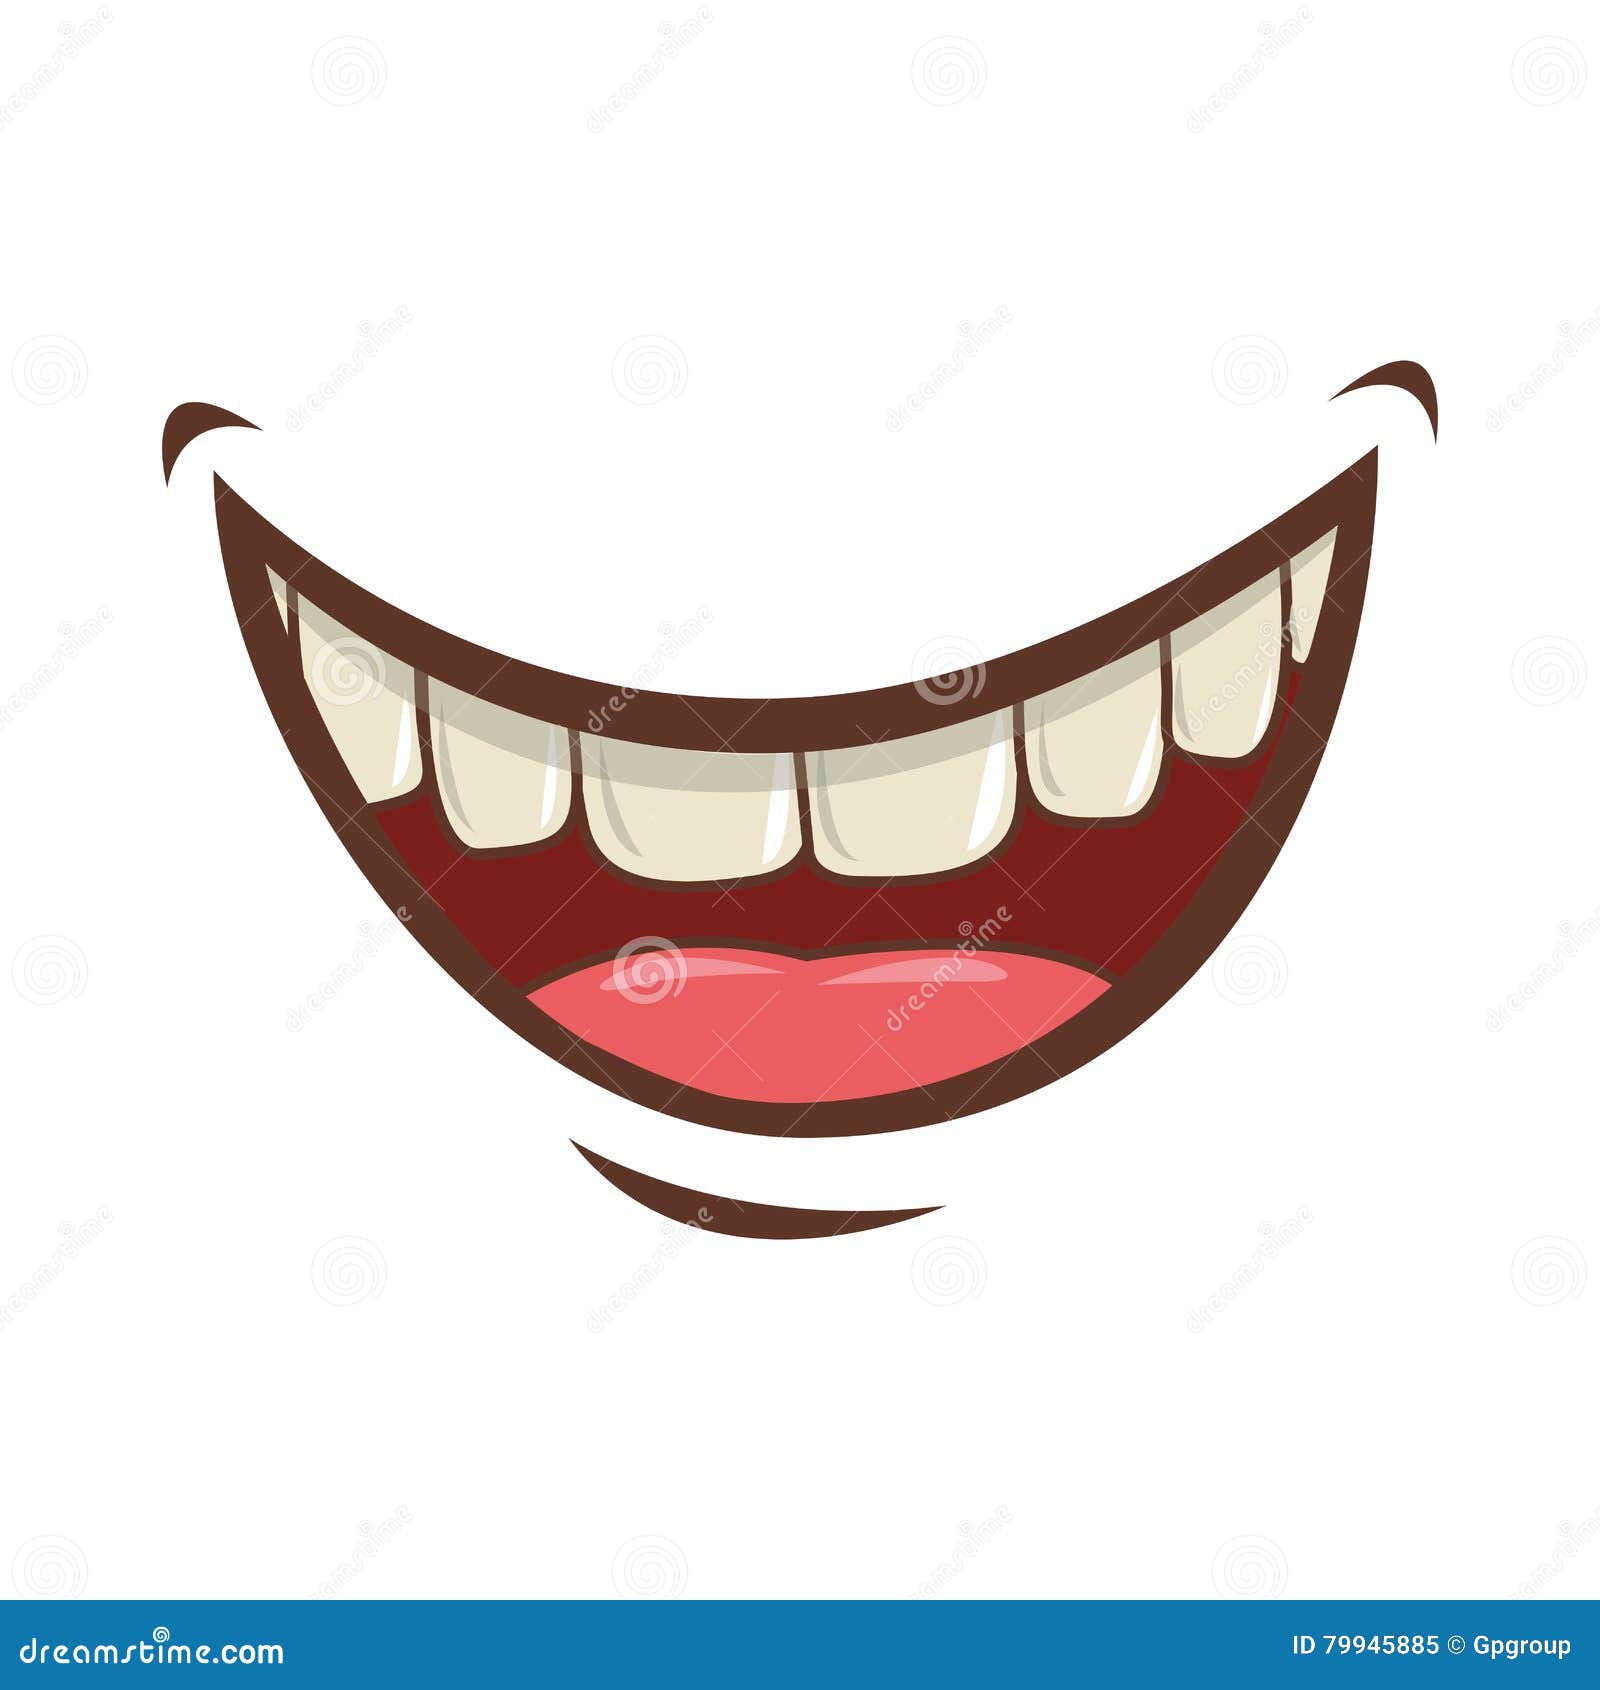 Mouth cartoon icon stock vector. Illustration of creative - 79945885